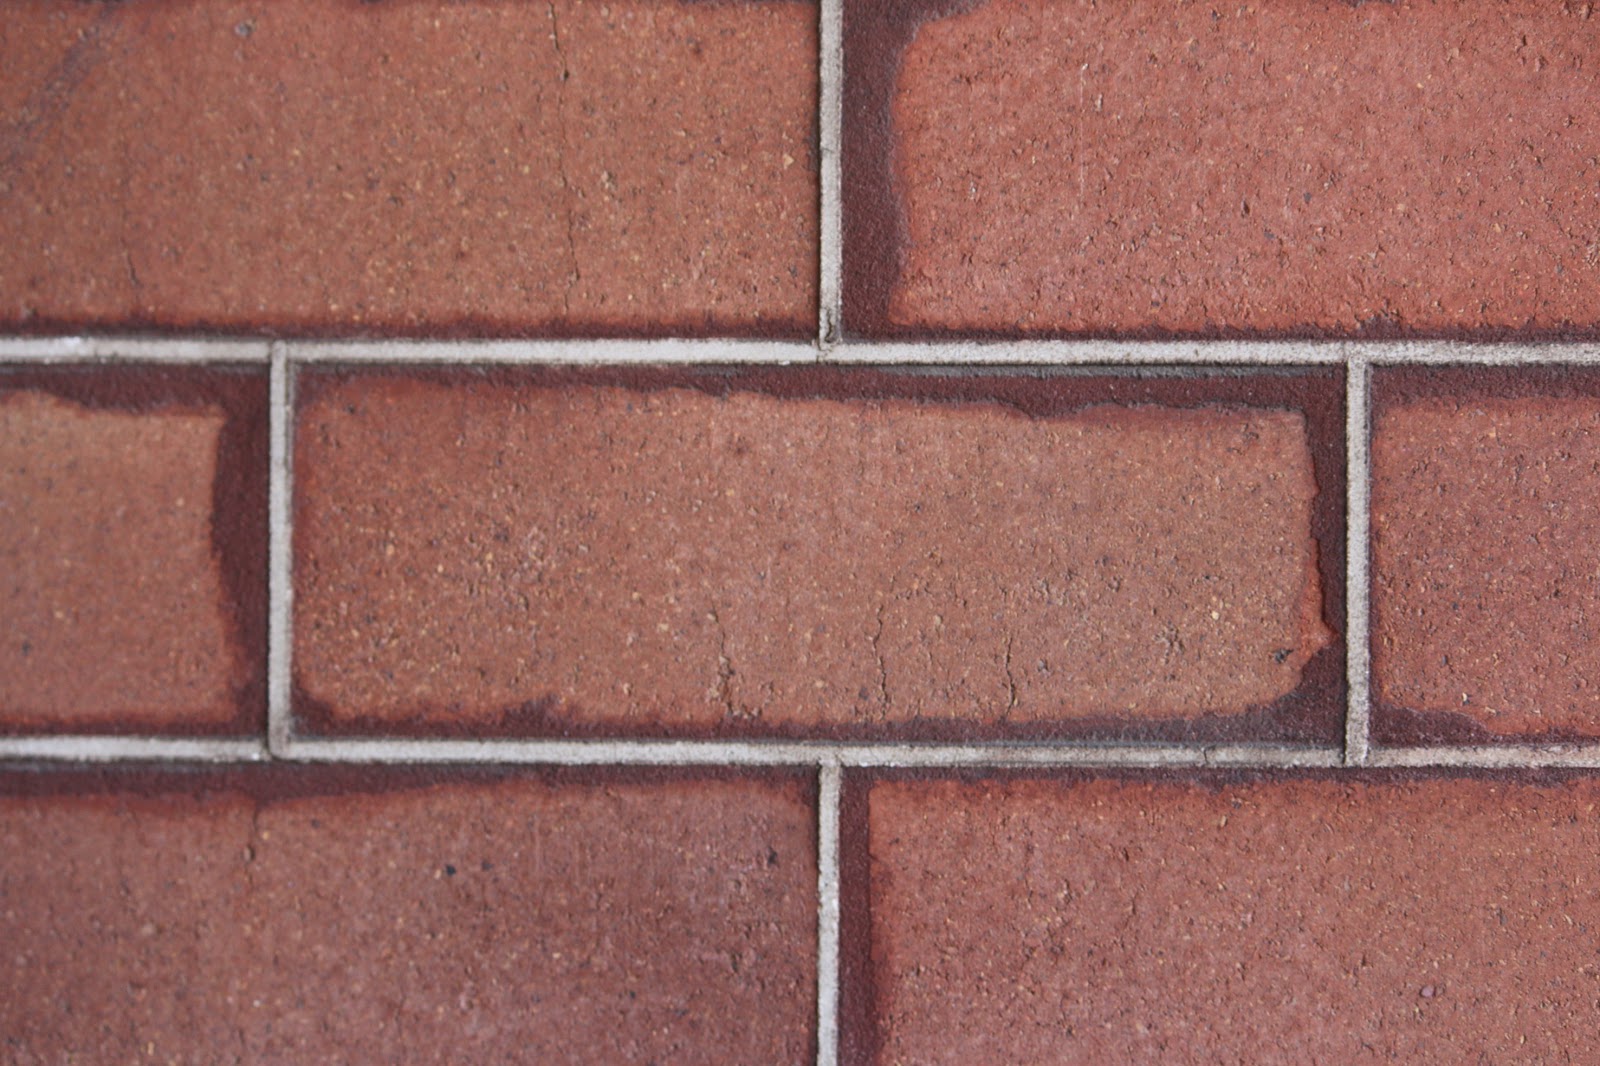 A close-up of a brick wall.